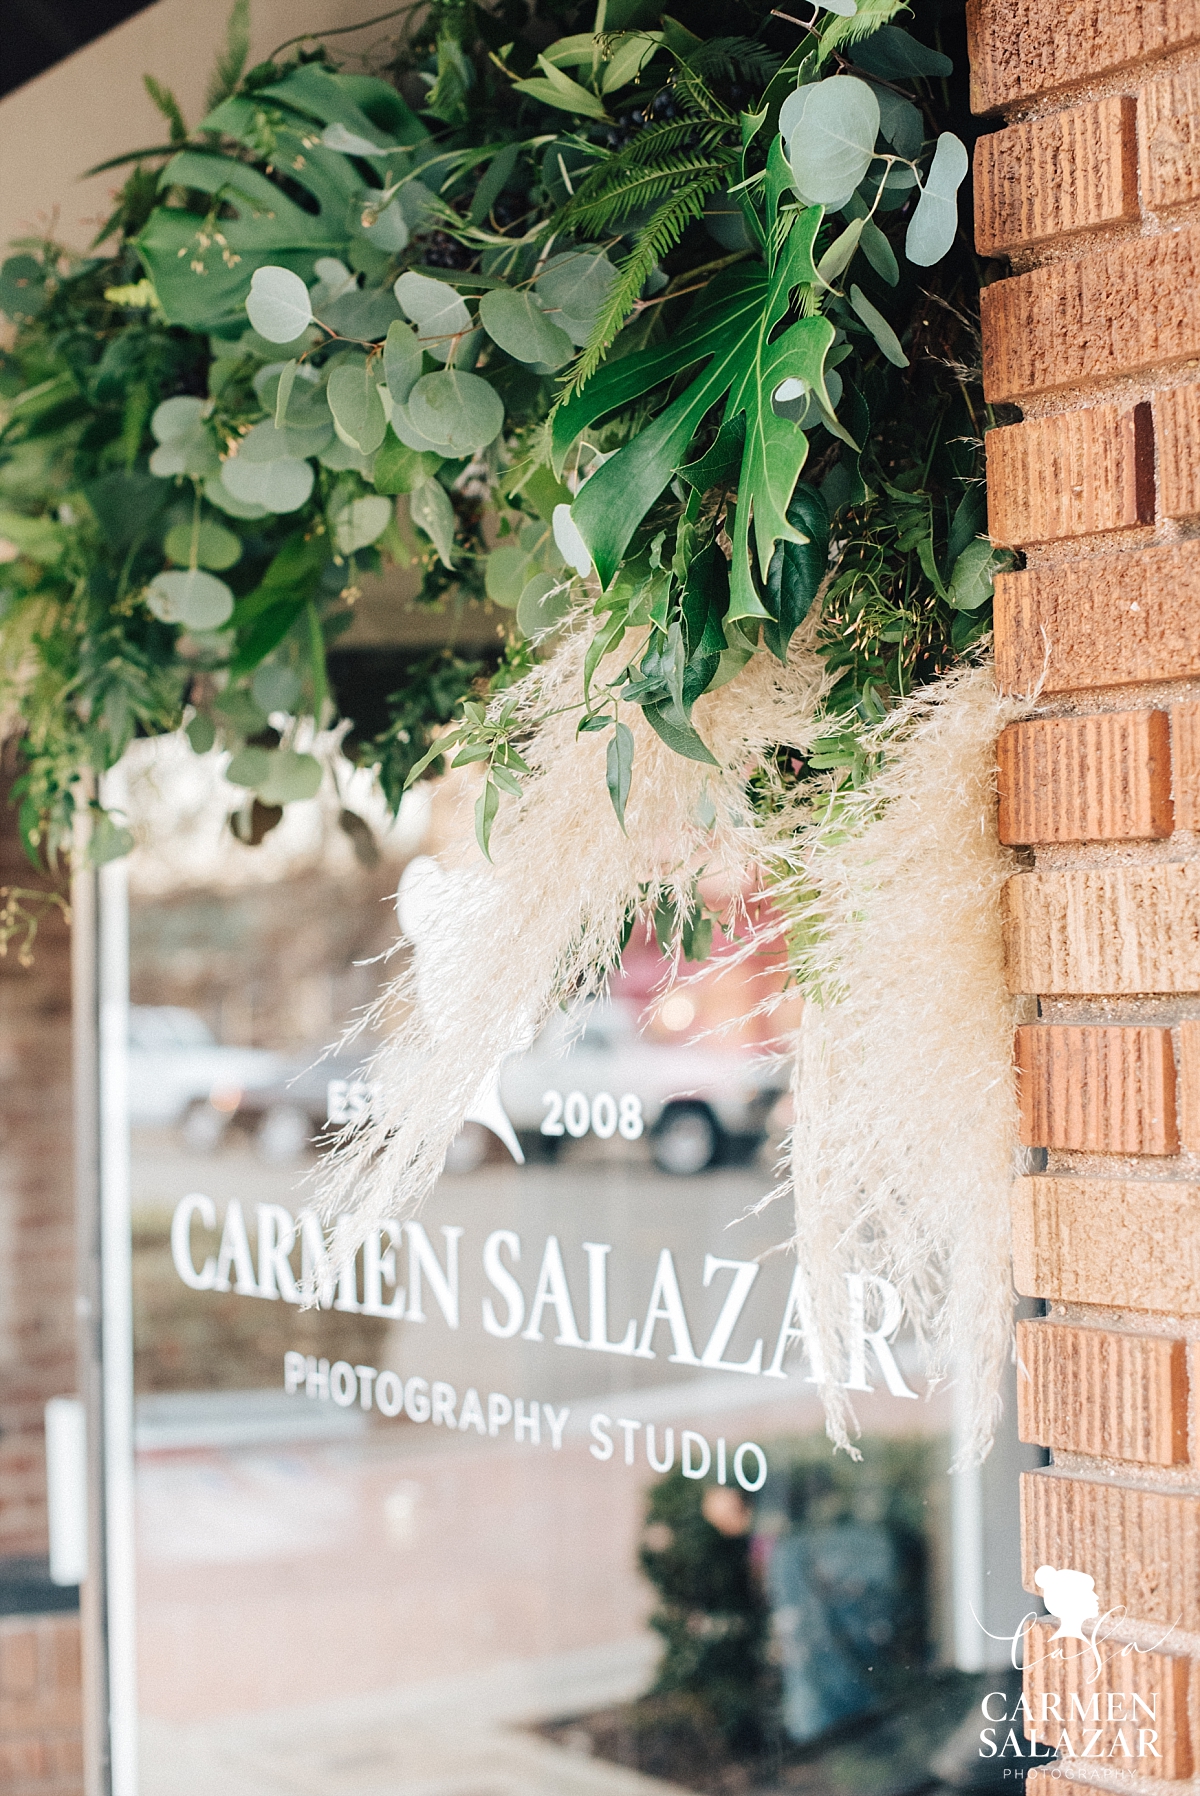 Tropical floral design at photography studio grand opening - Carmen Salazar